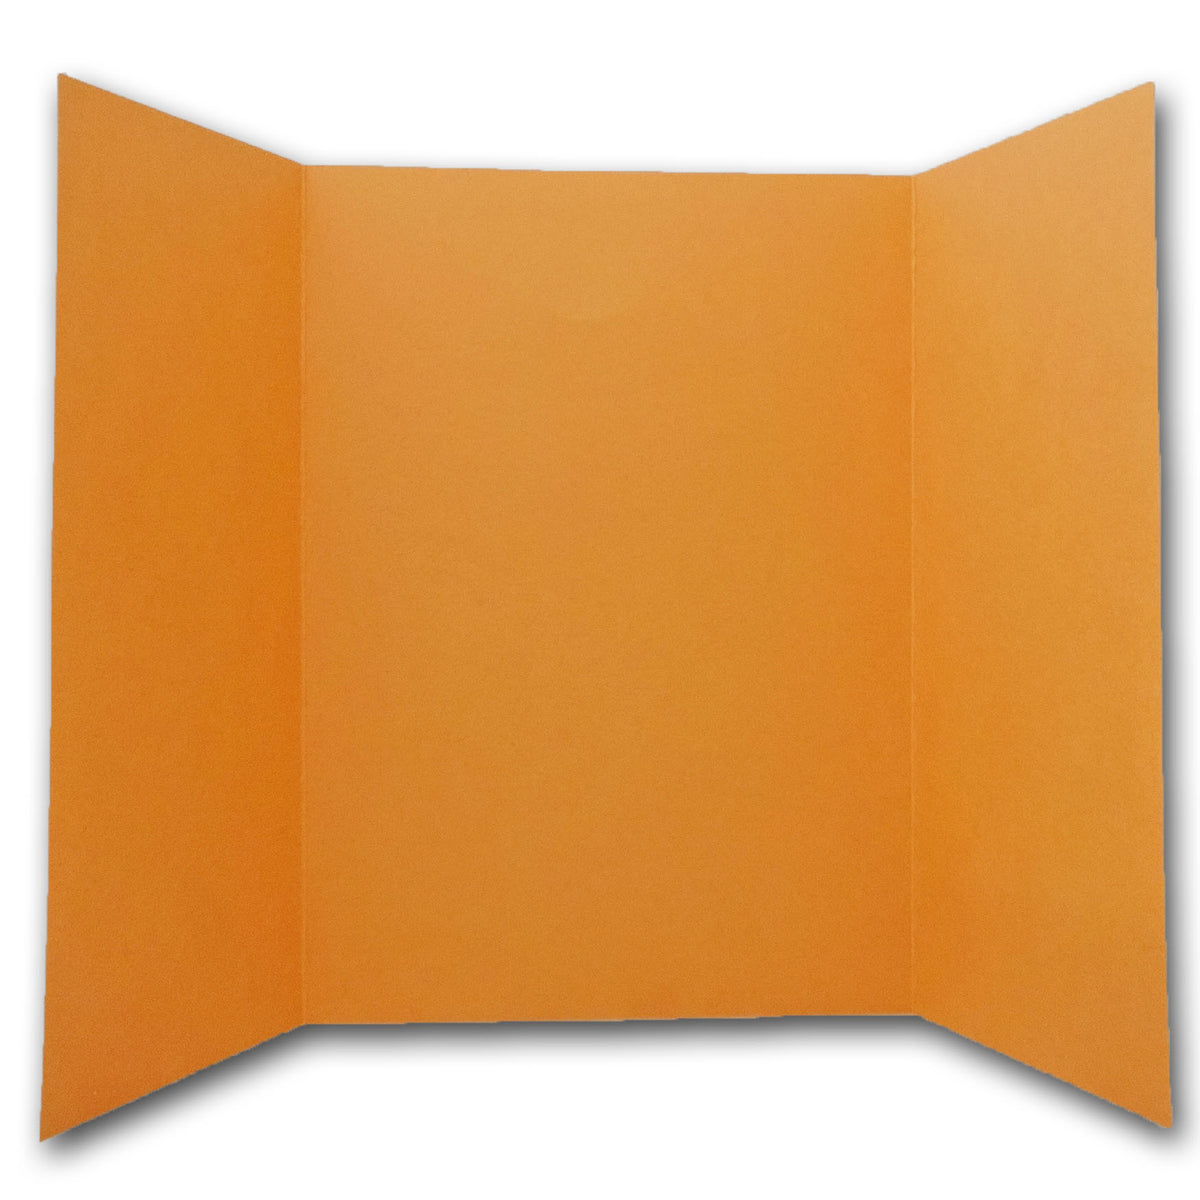 Orange 5x7 Gate Fold Discount Card Stock for DIY Invitations